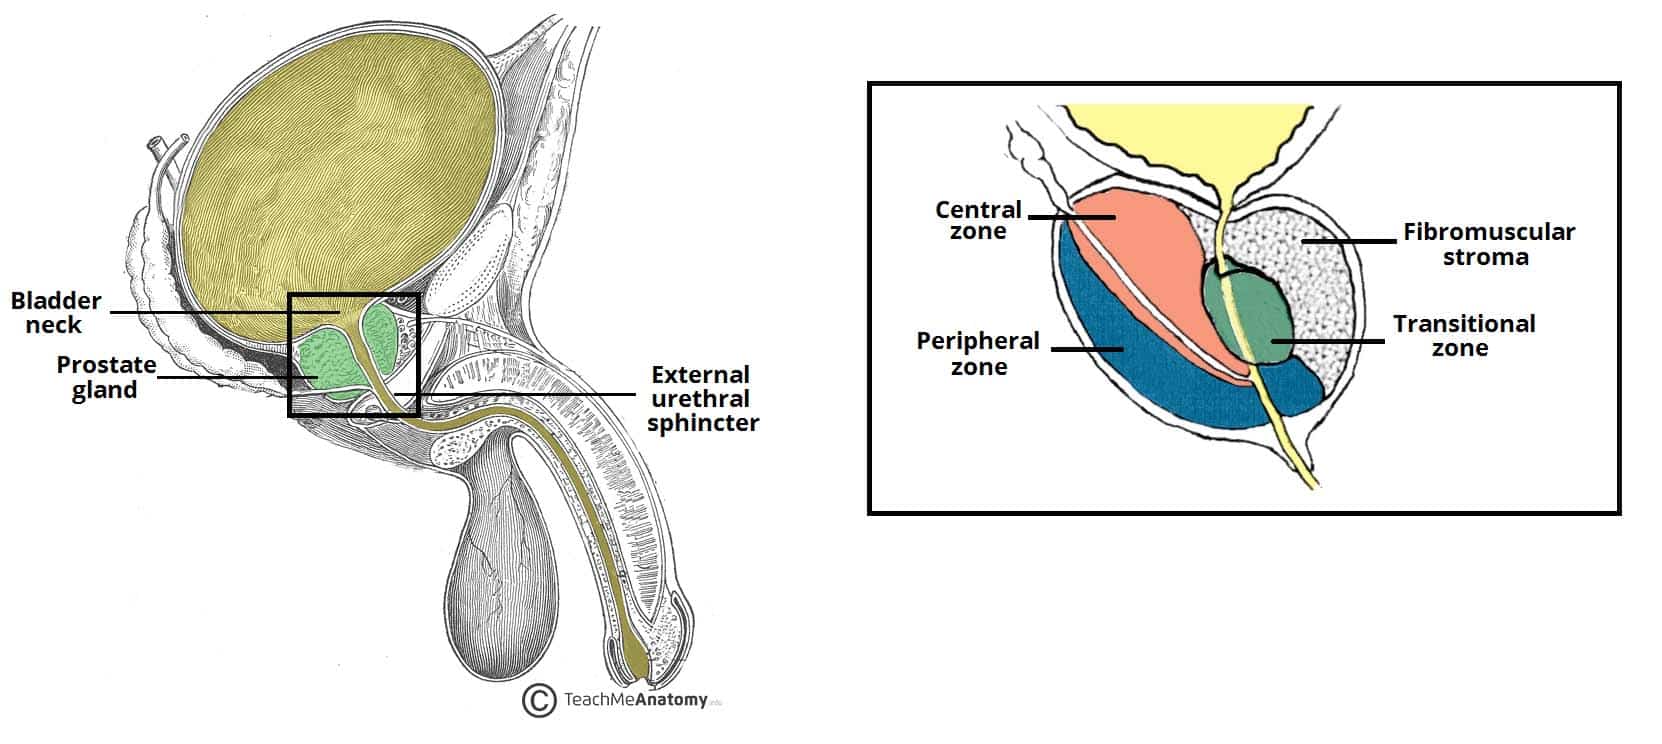 prostate gland capsule)